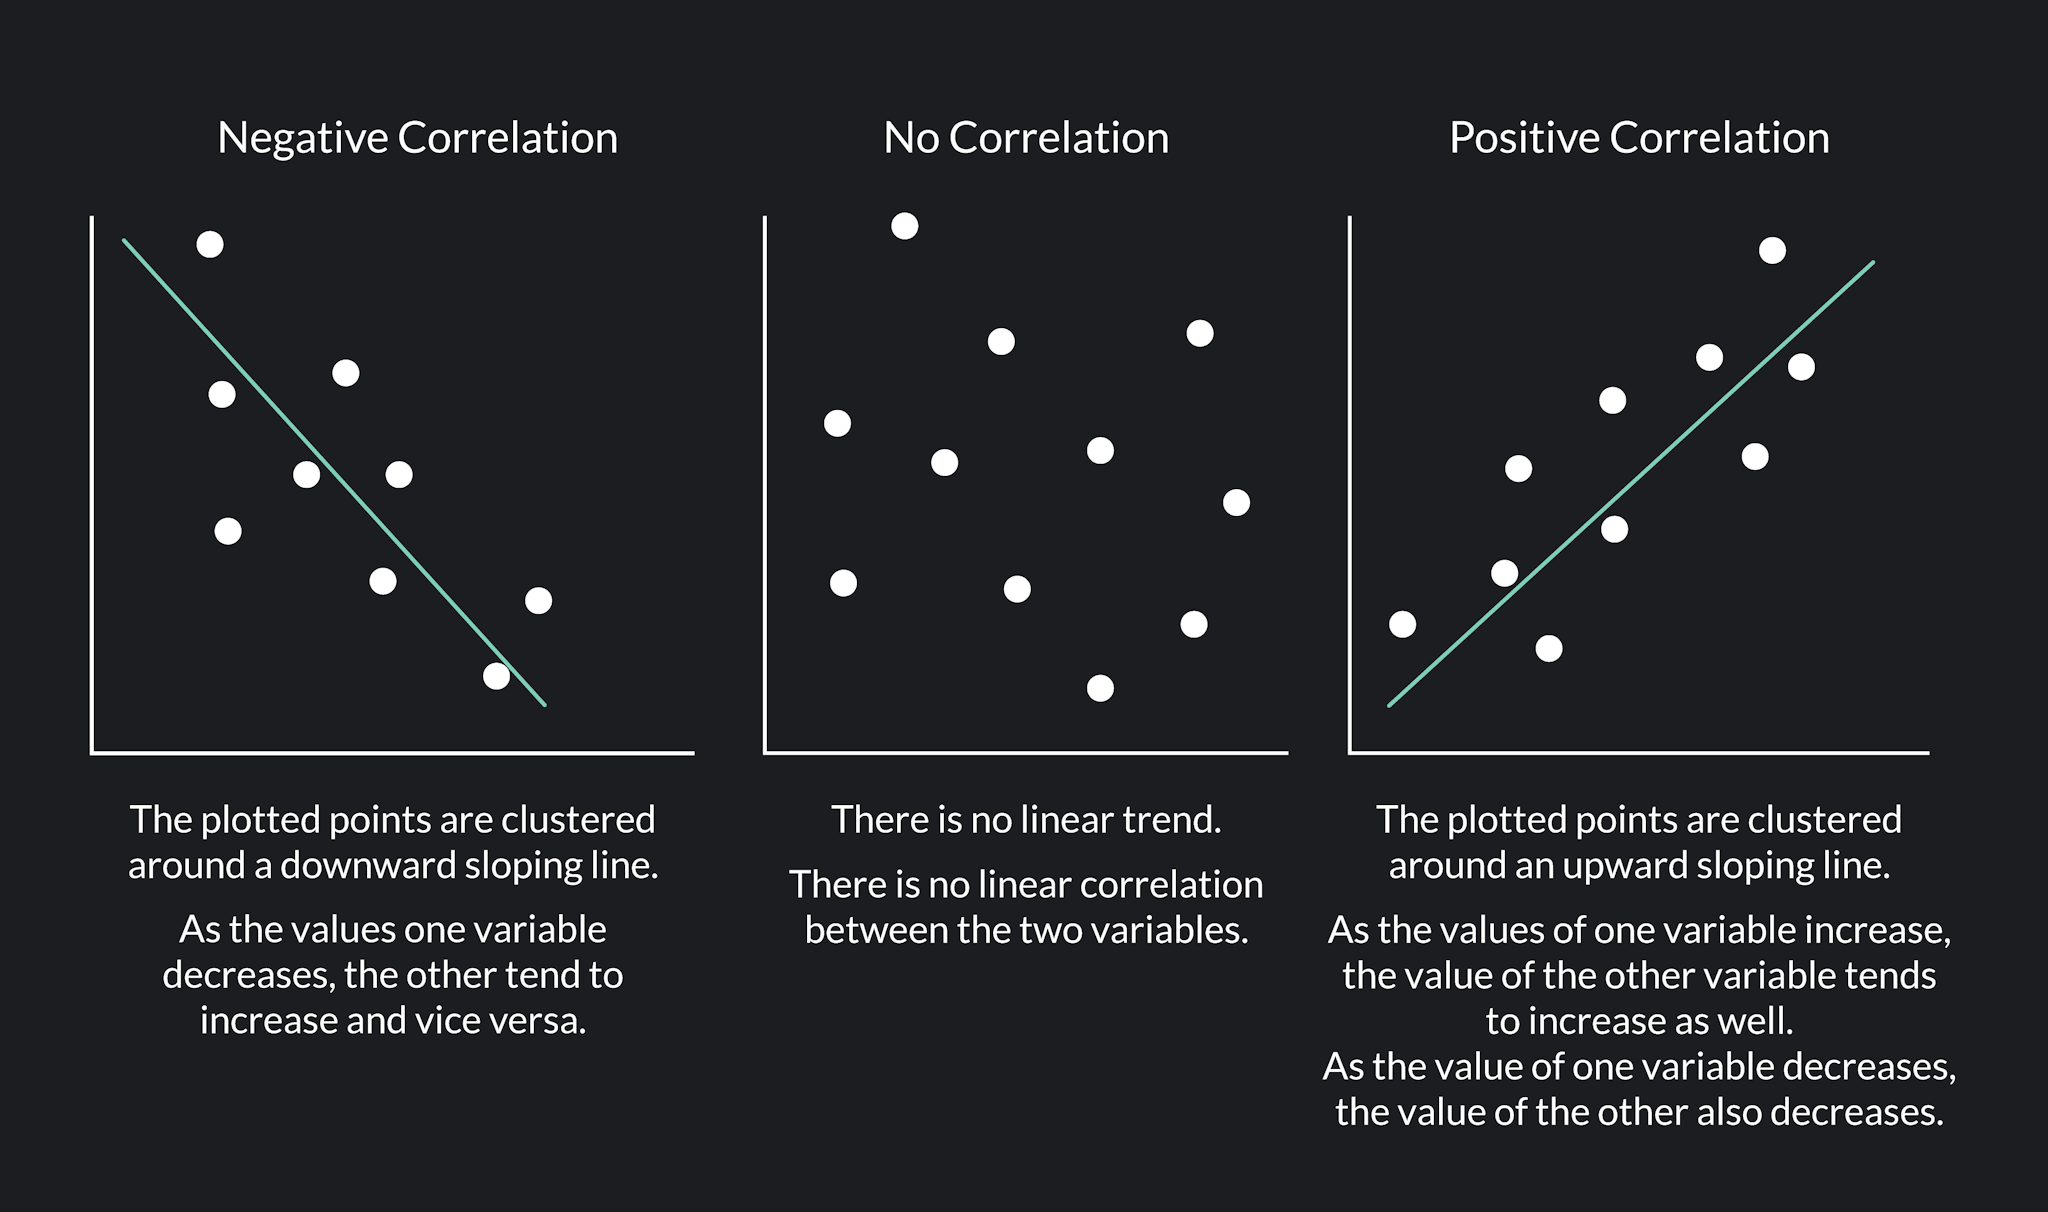 3 graphs where one shows negative correlation, one shows no correlation, and one shows positive correlation